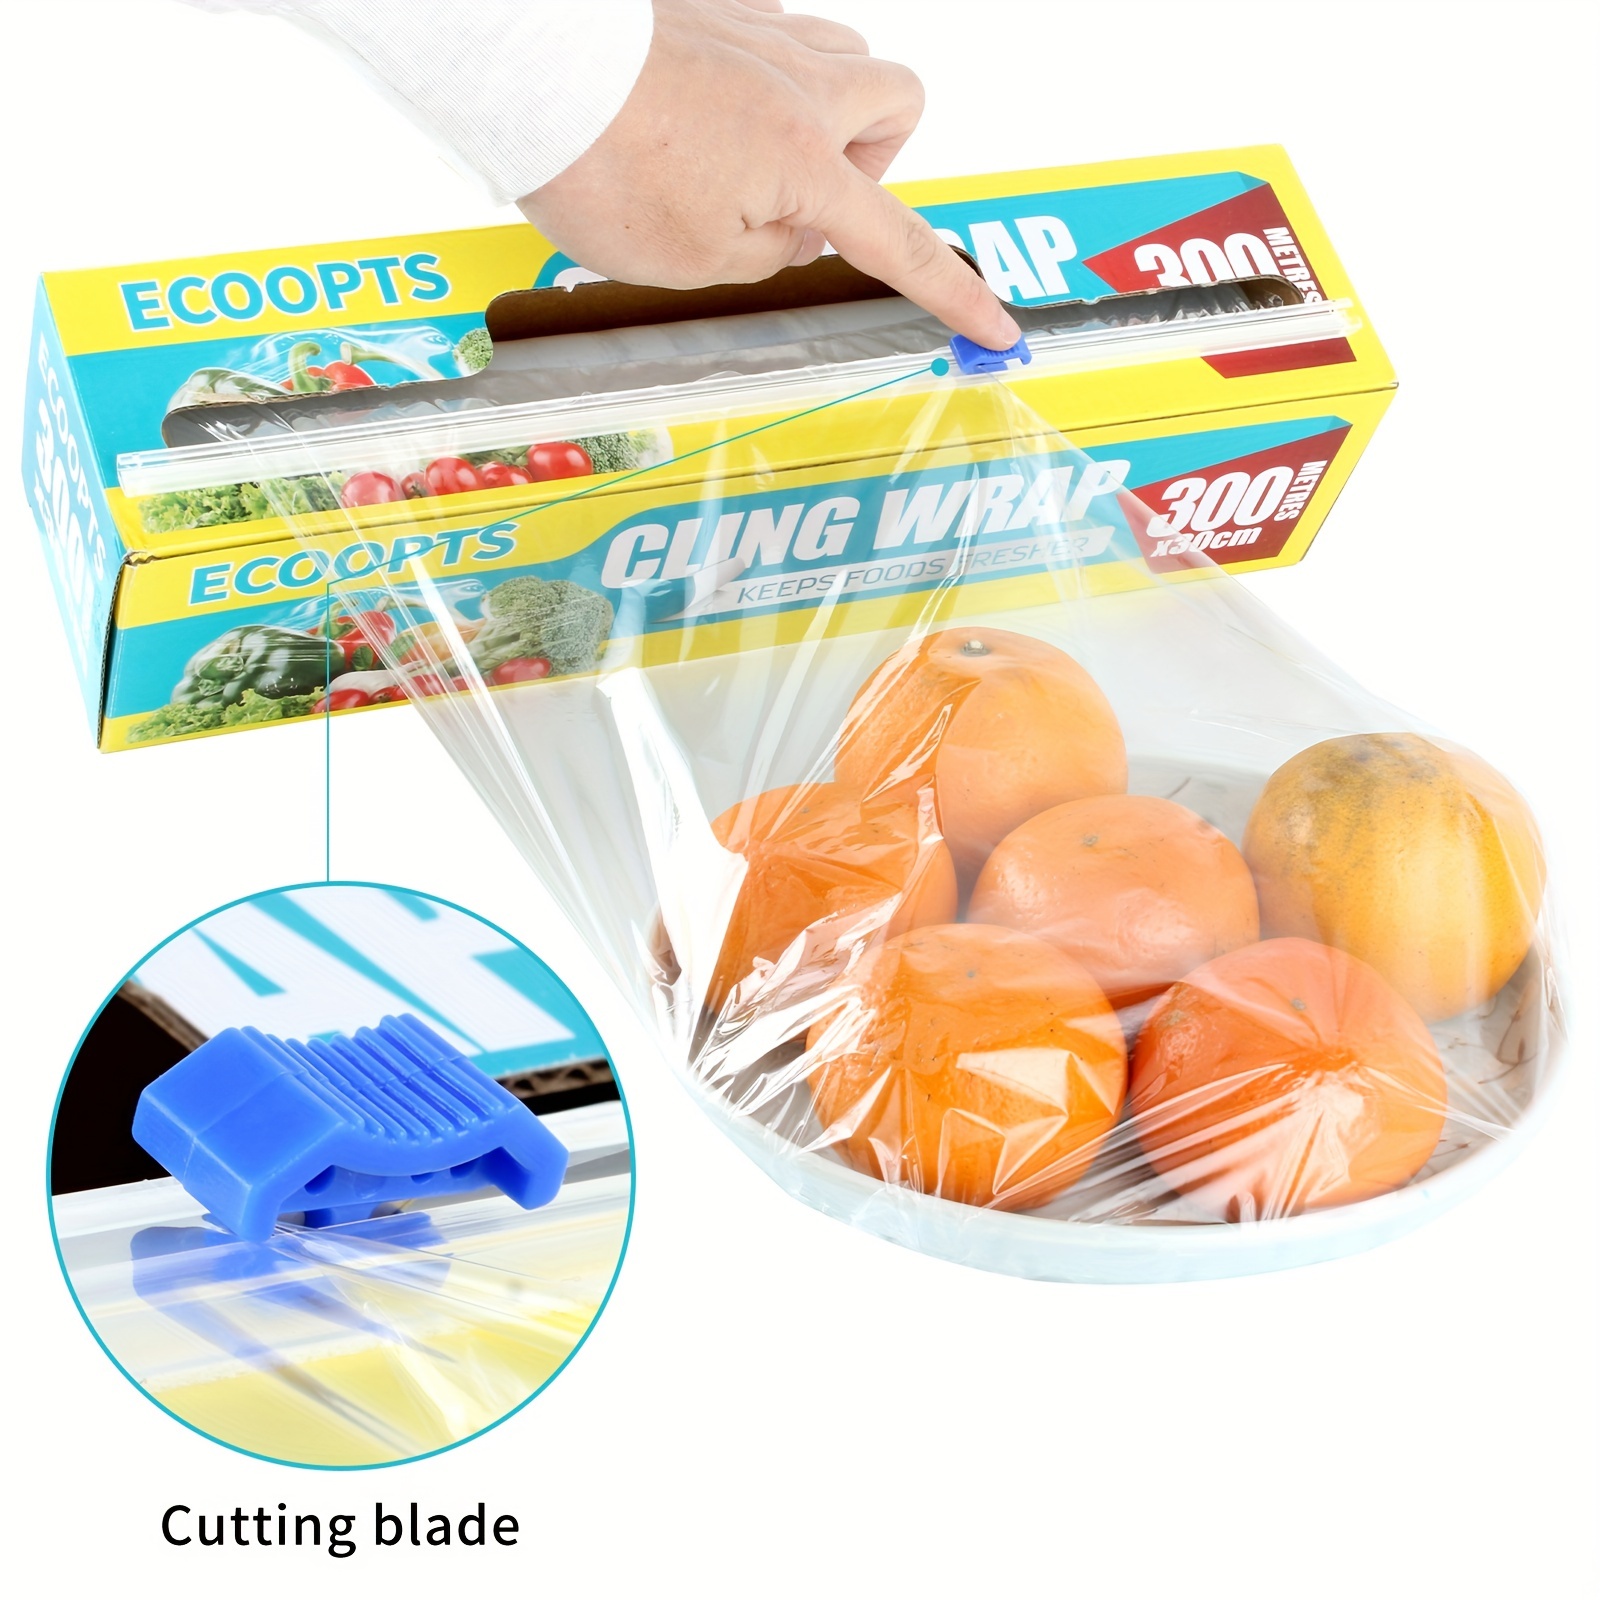 cut plastic wrap EASY way (slide cutter) 